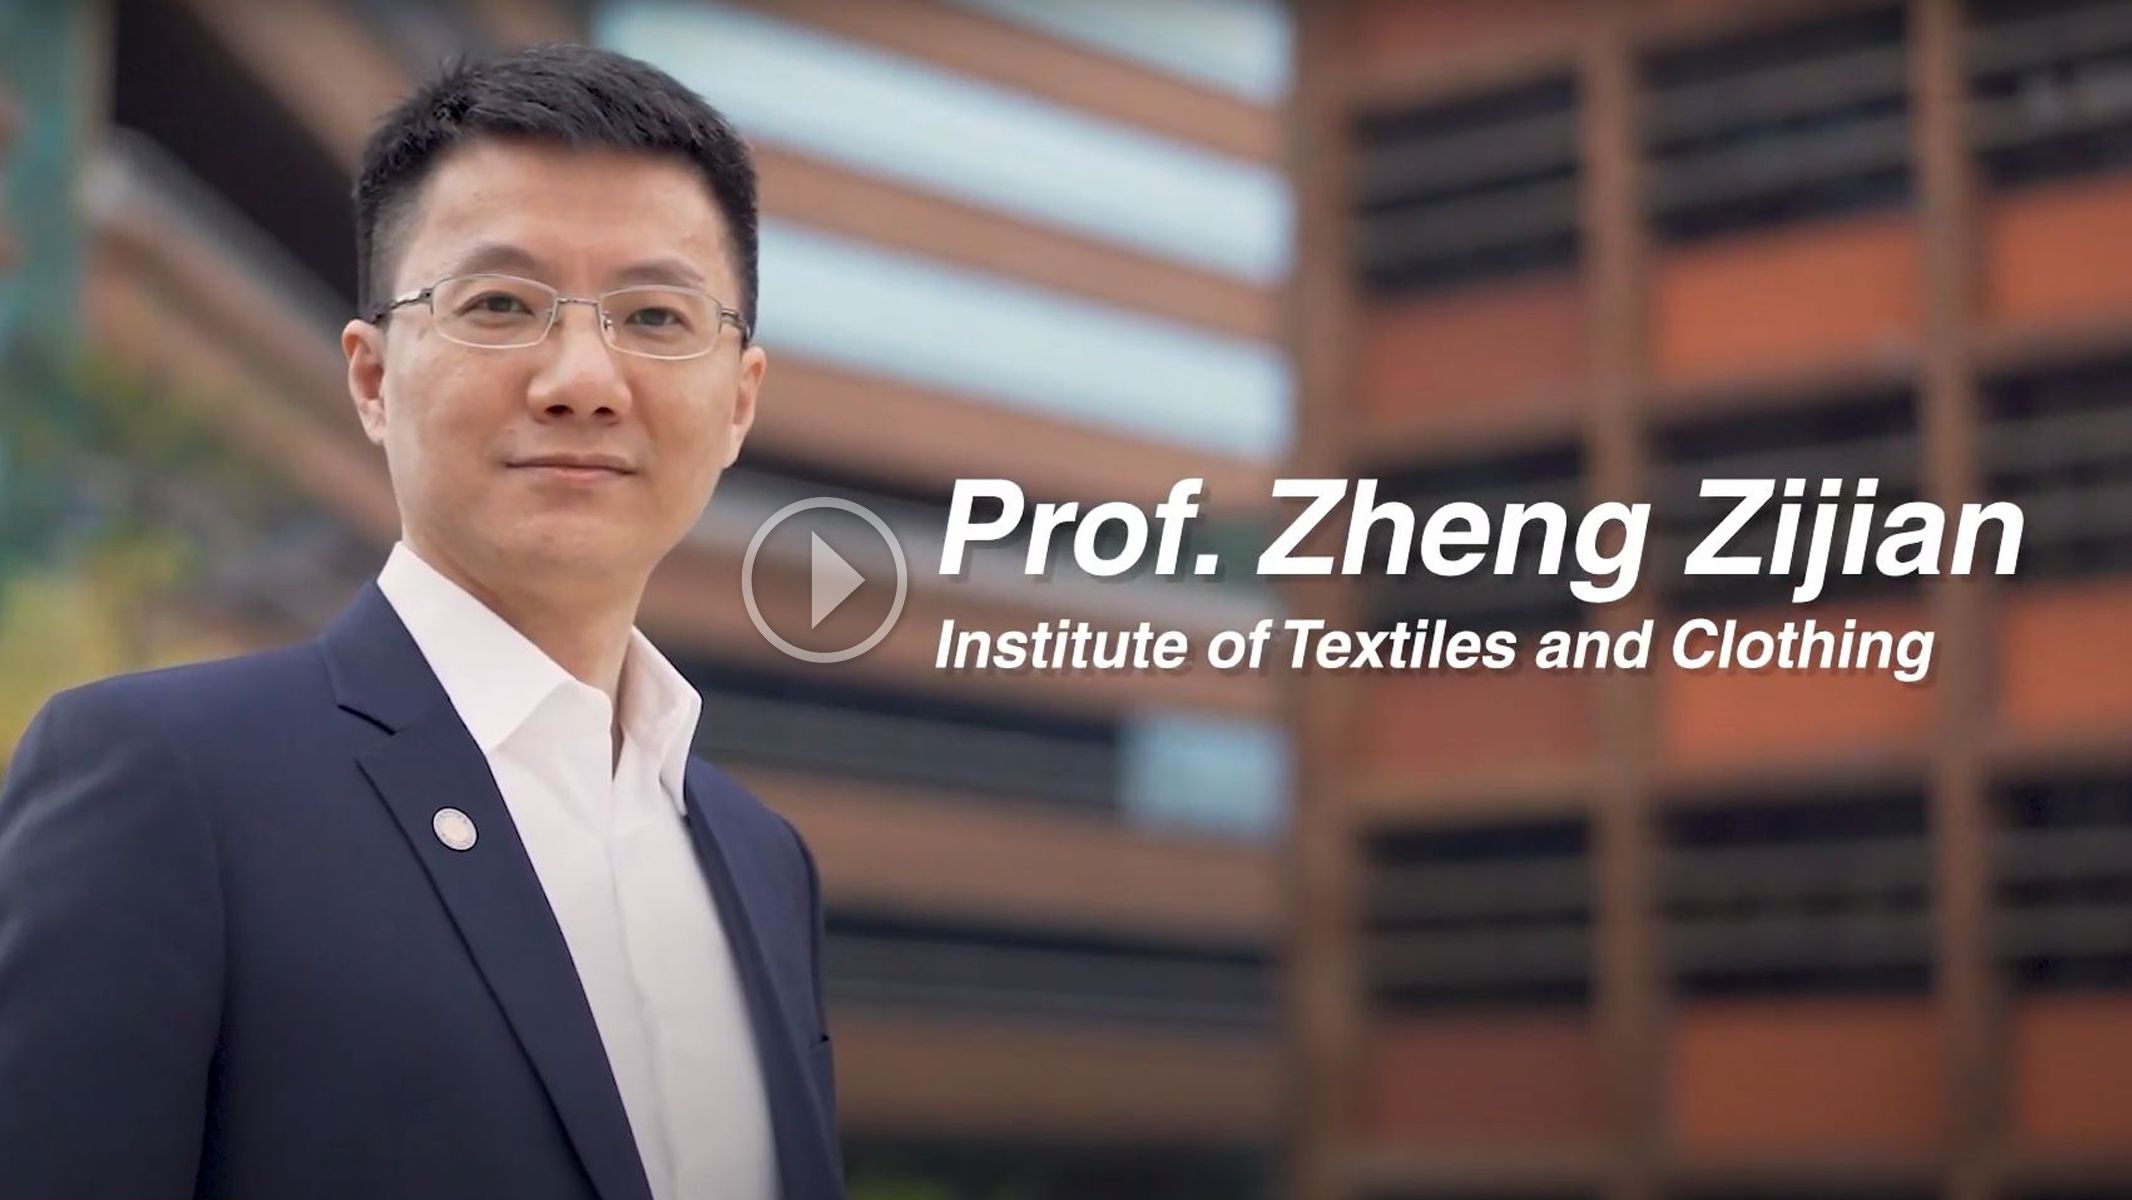 Professor Zijian Zheng of ITC